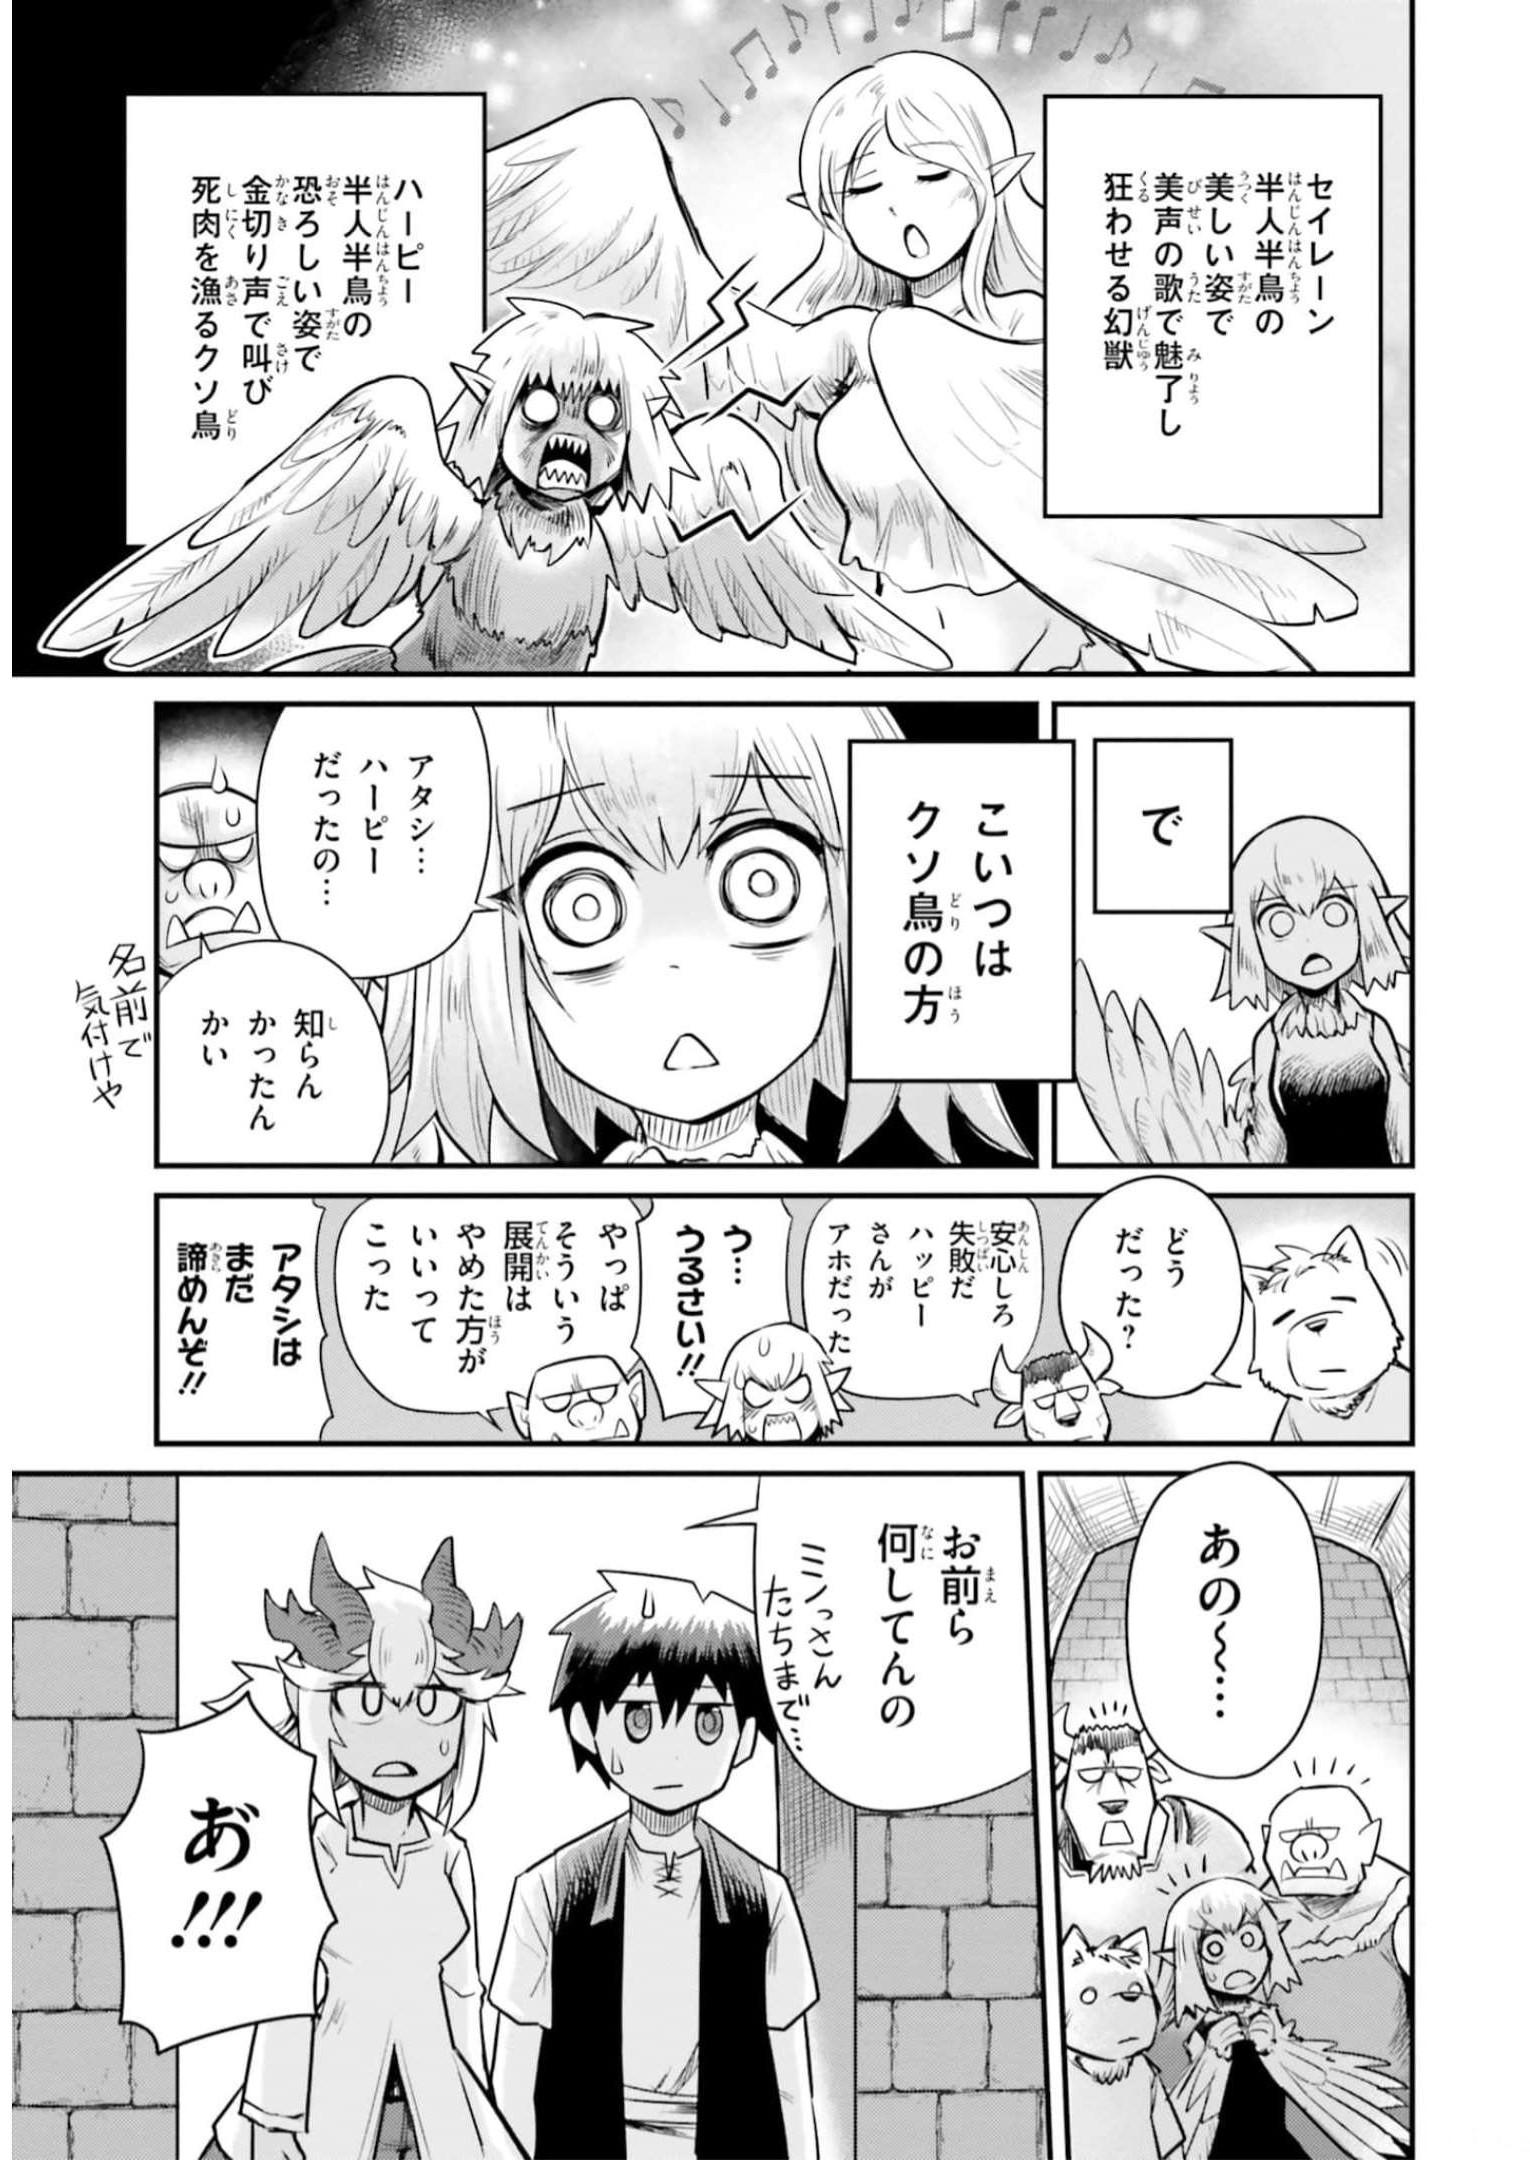 Dungeon no Osananajimi - Chapter 3 - Page 11